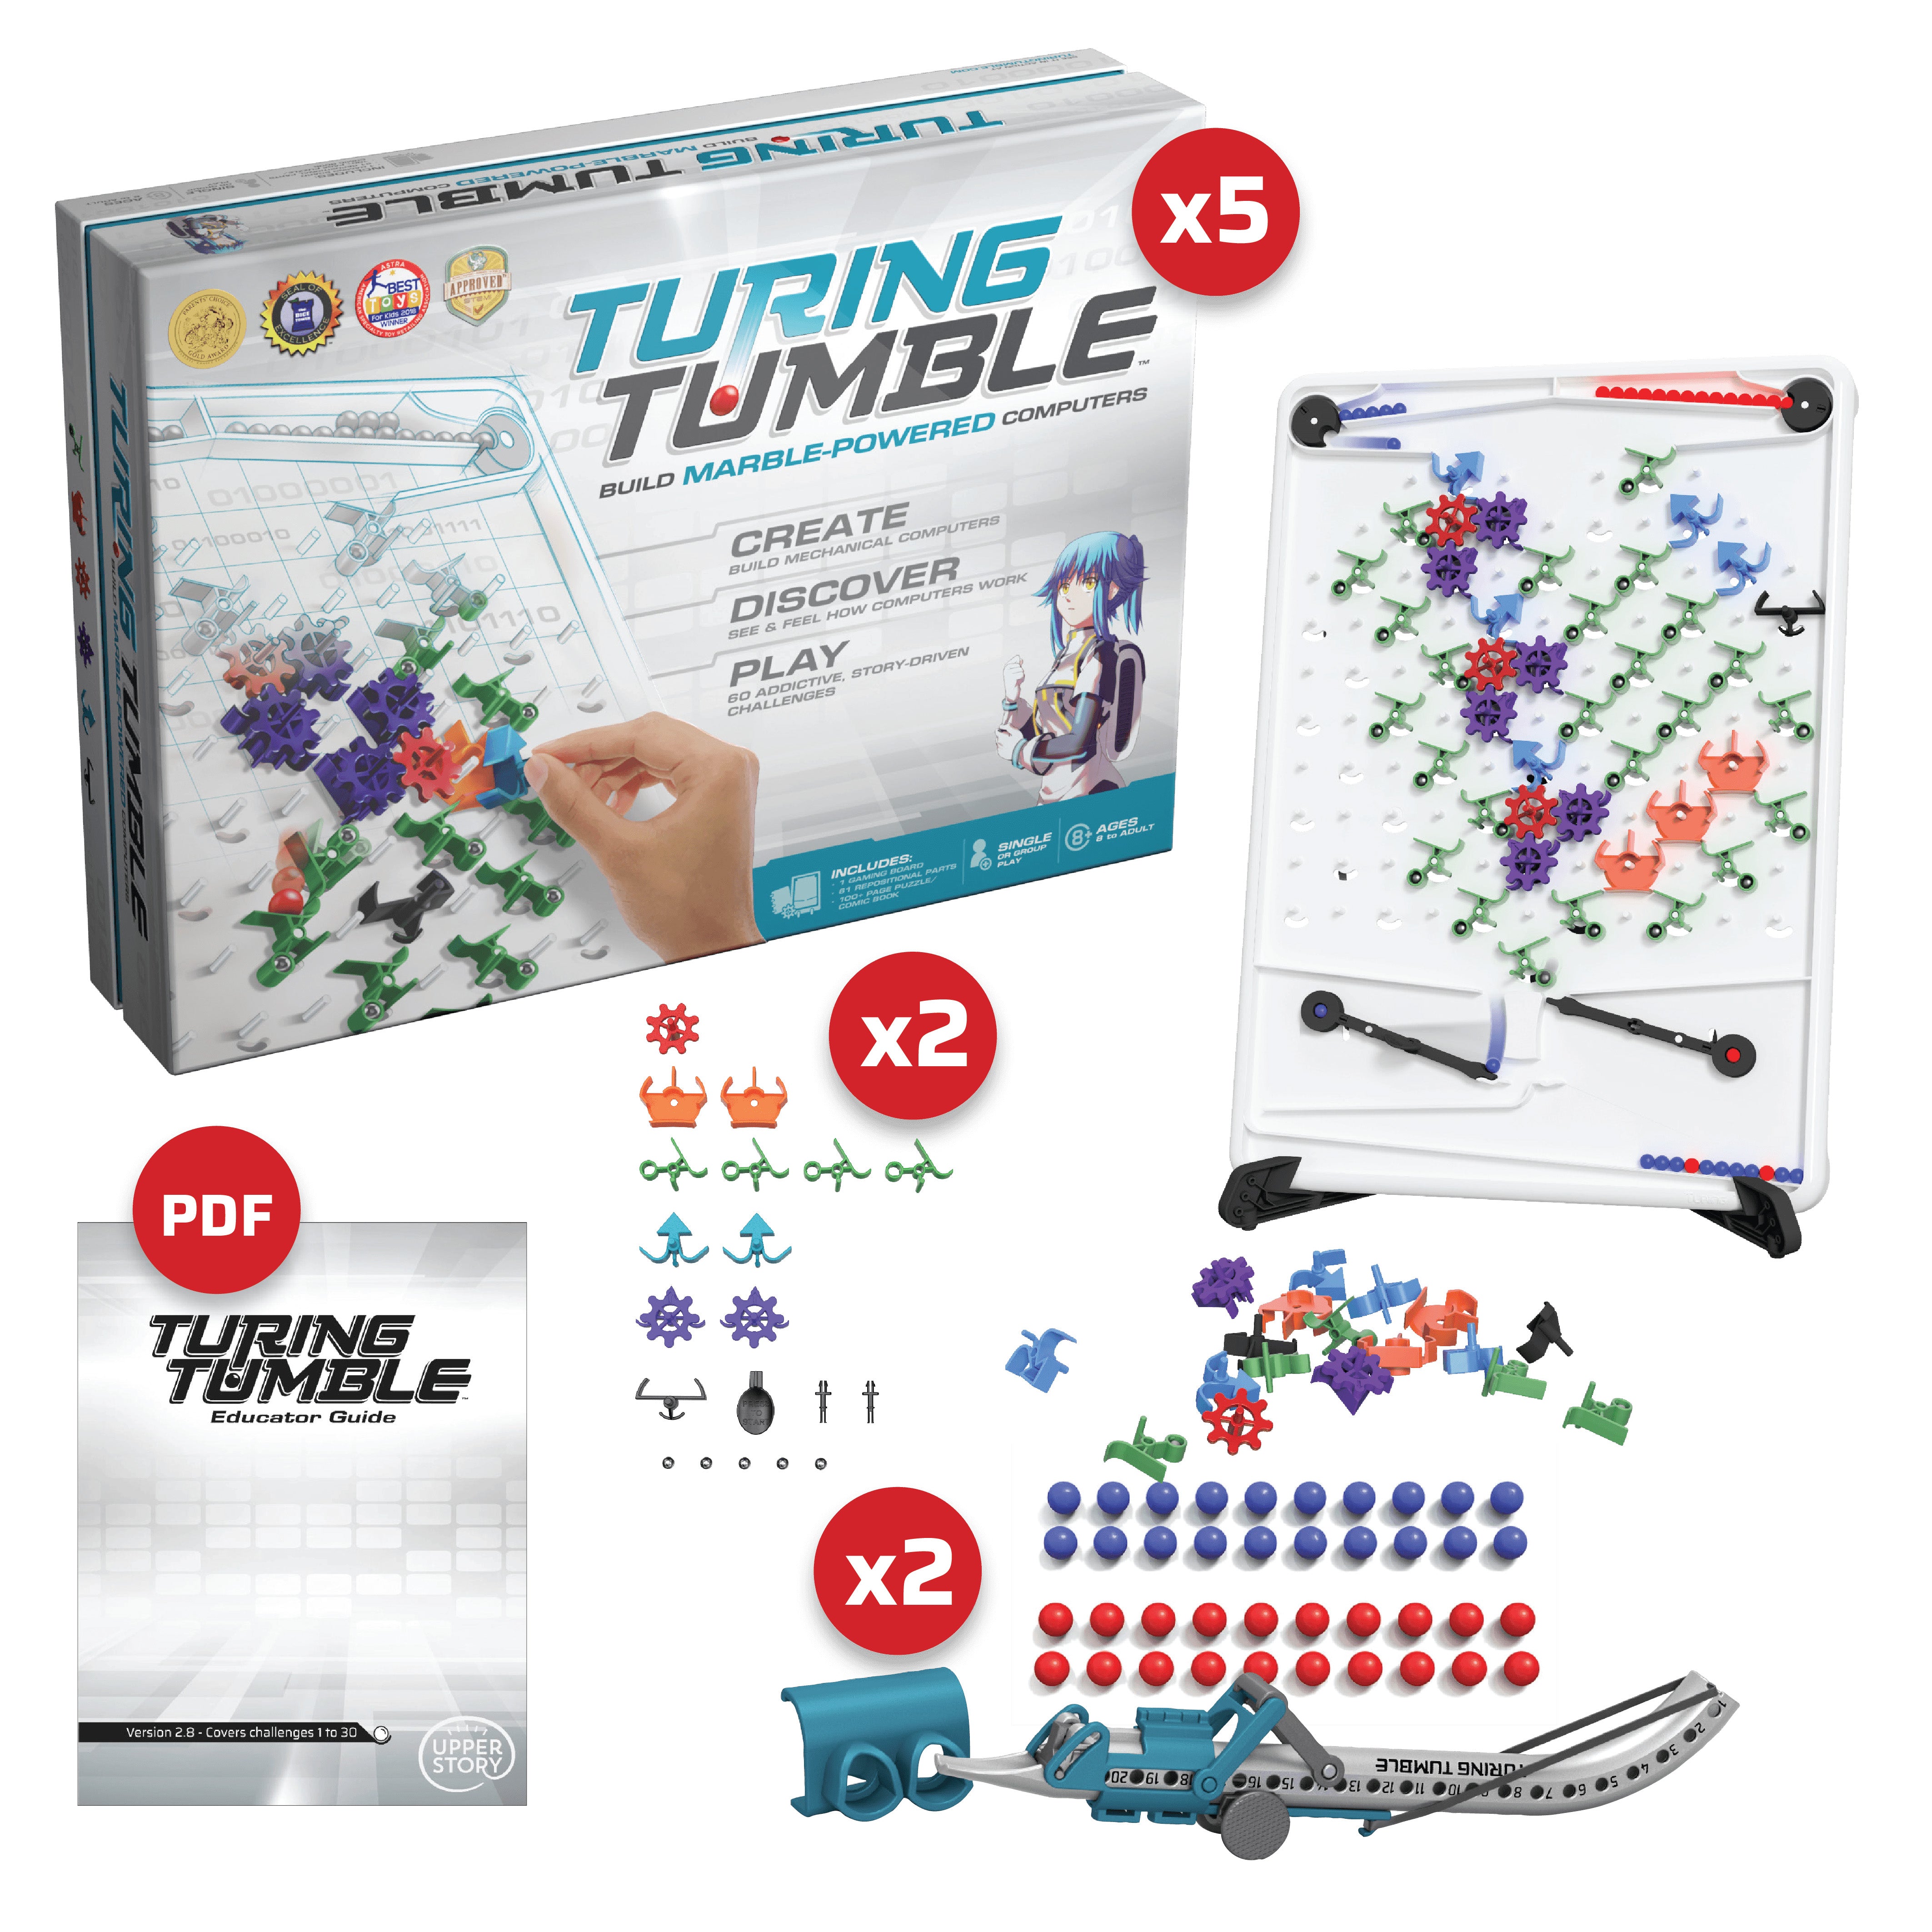 Turing Tumble's Incredible Kickstarter Journey